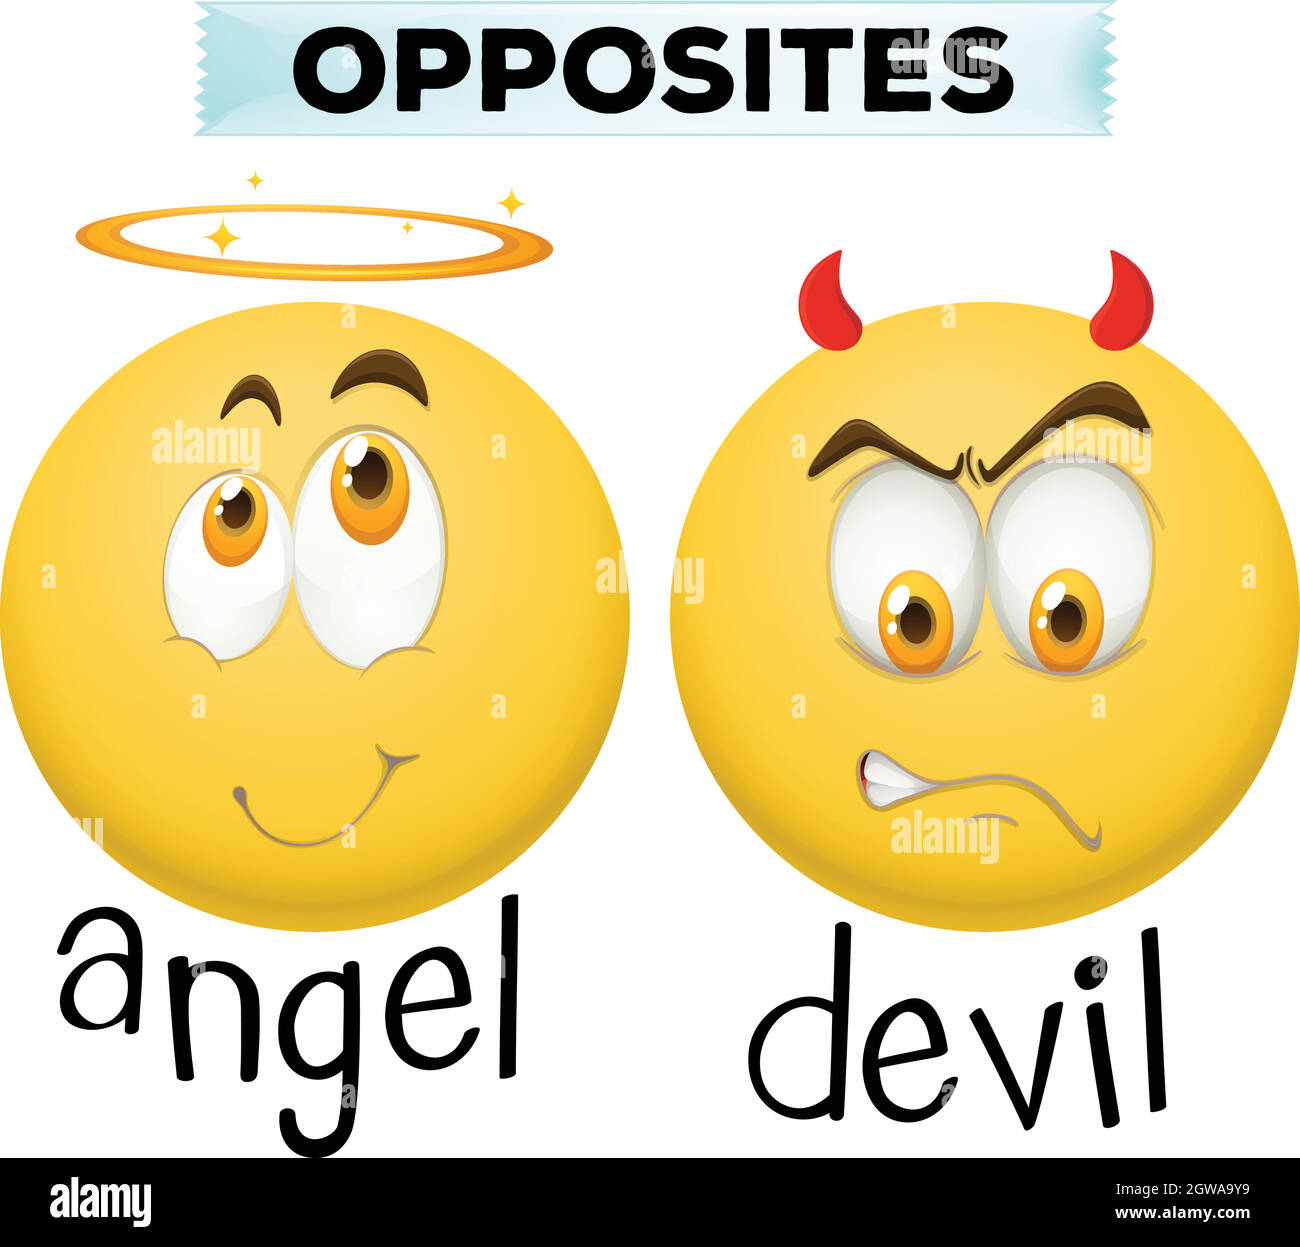 Opposite character for angel and devil Stock Vector